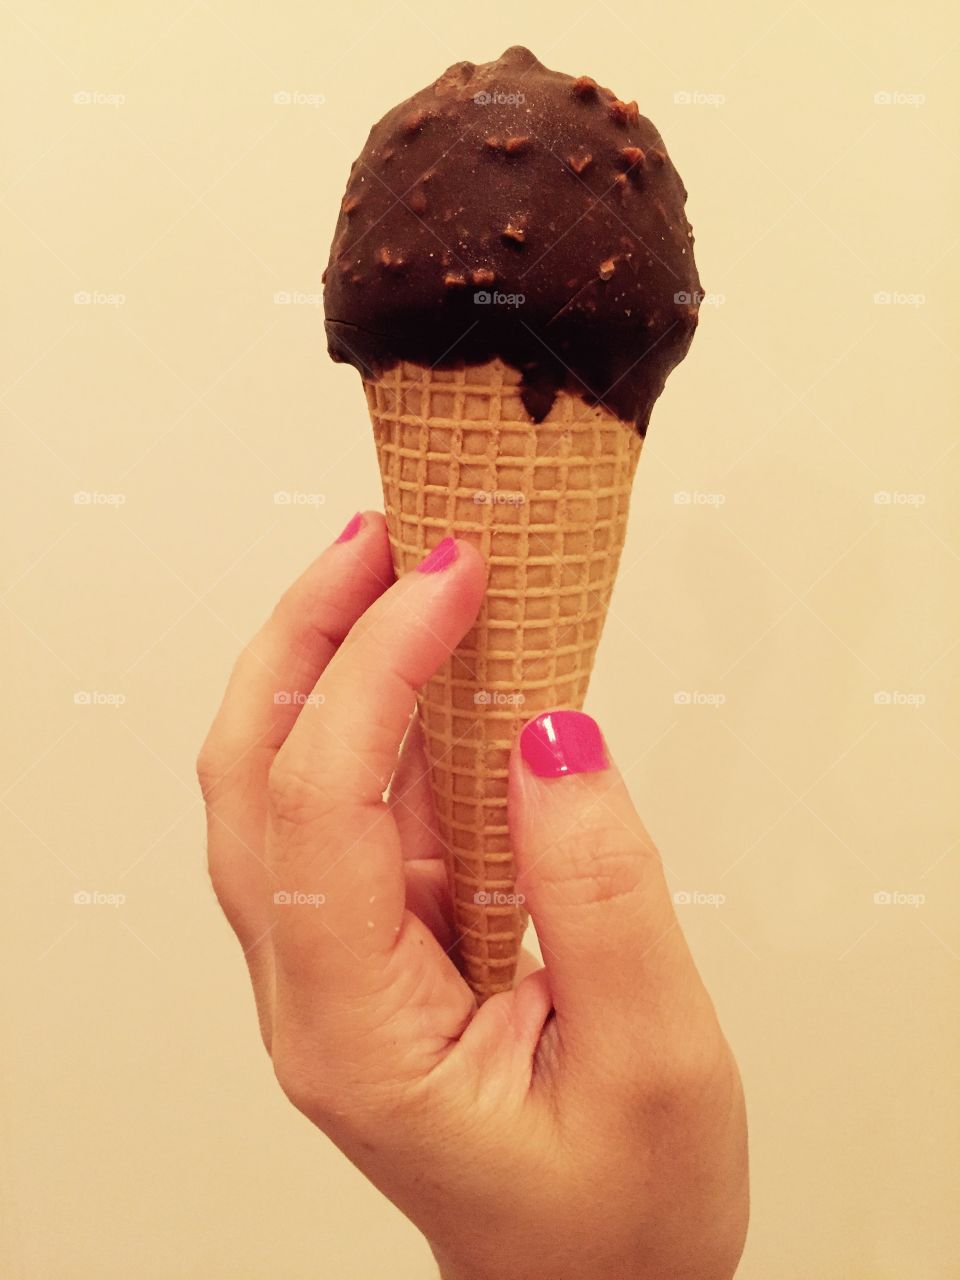 Ice cream cone. Summertime snack attack 